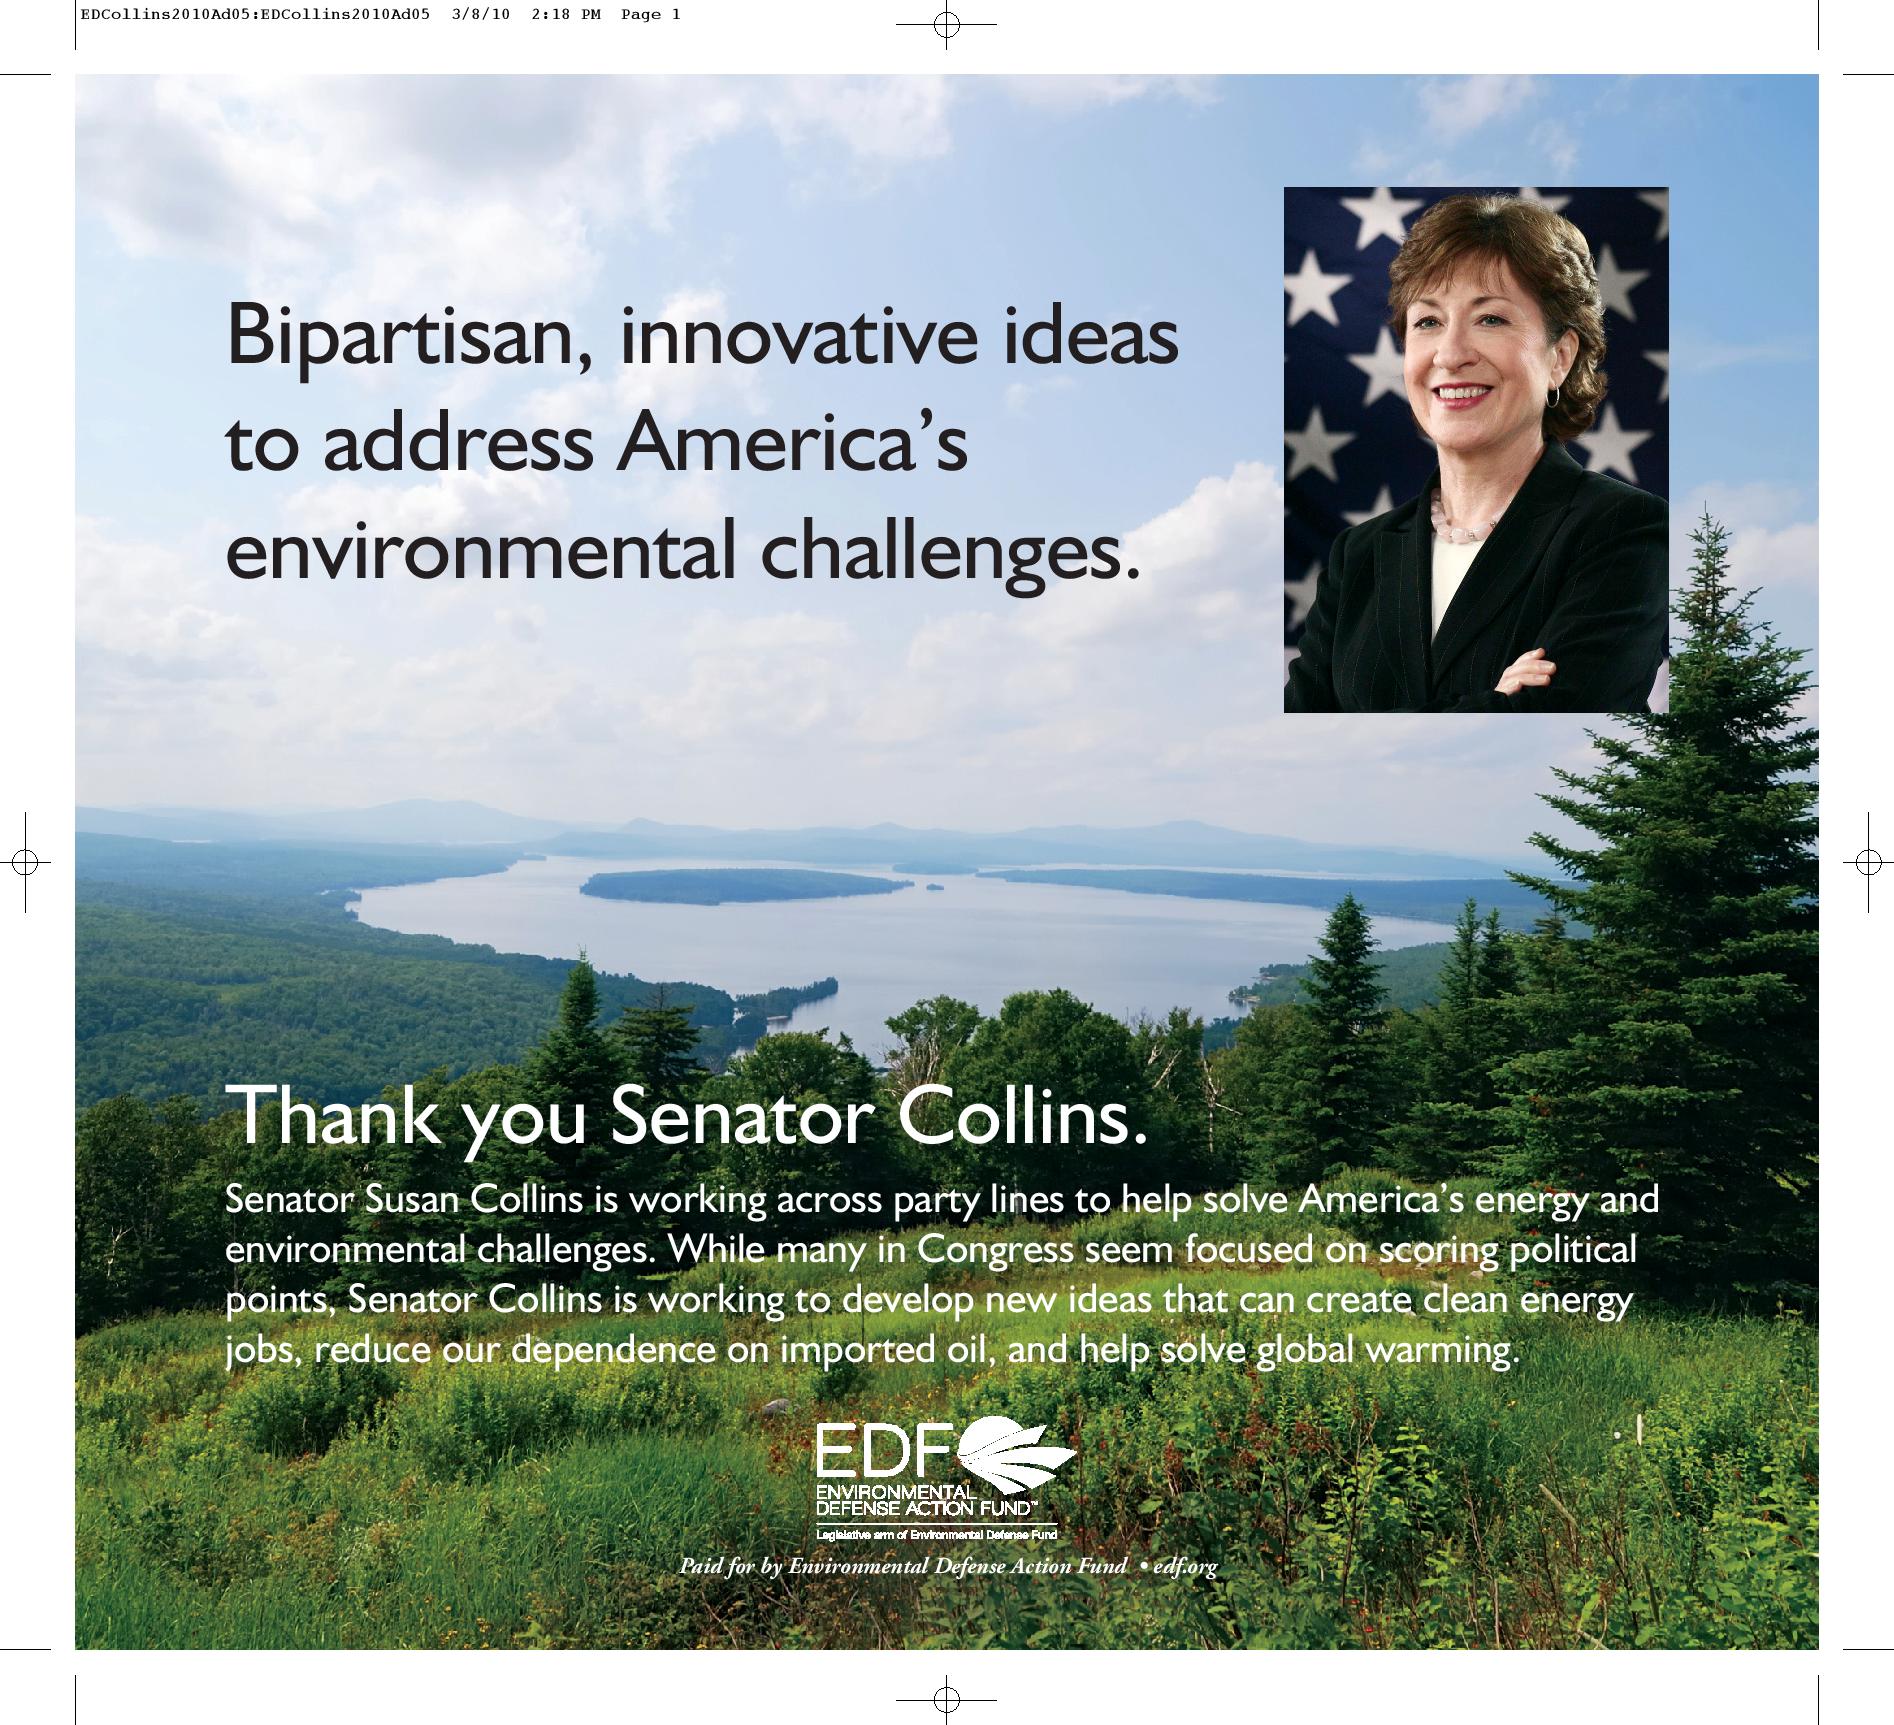 Thank you Senator Collins